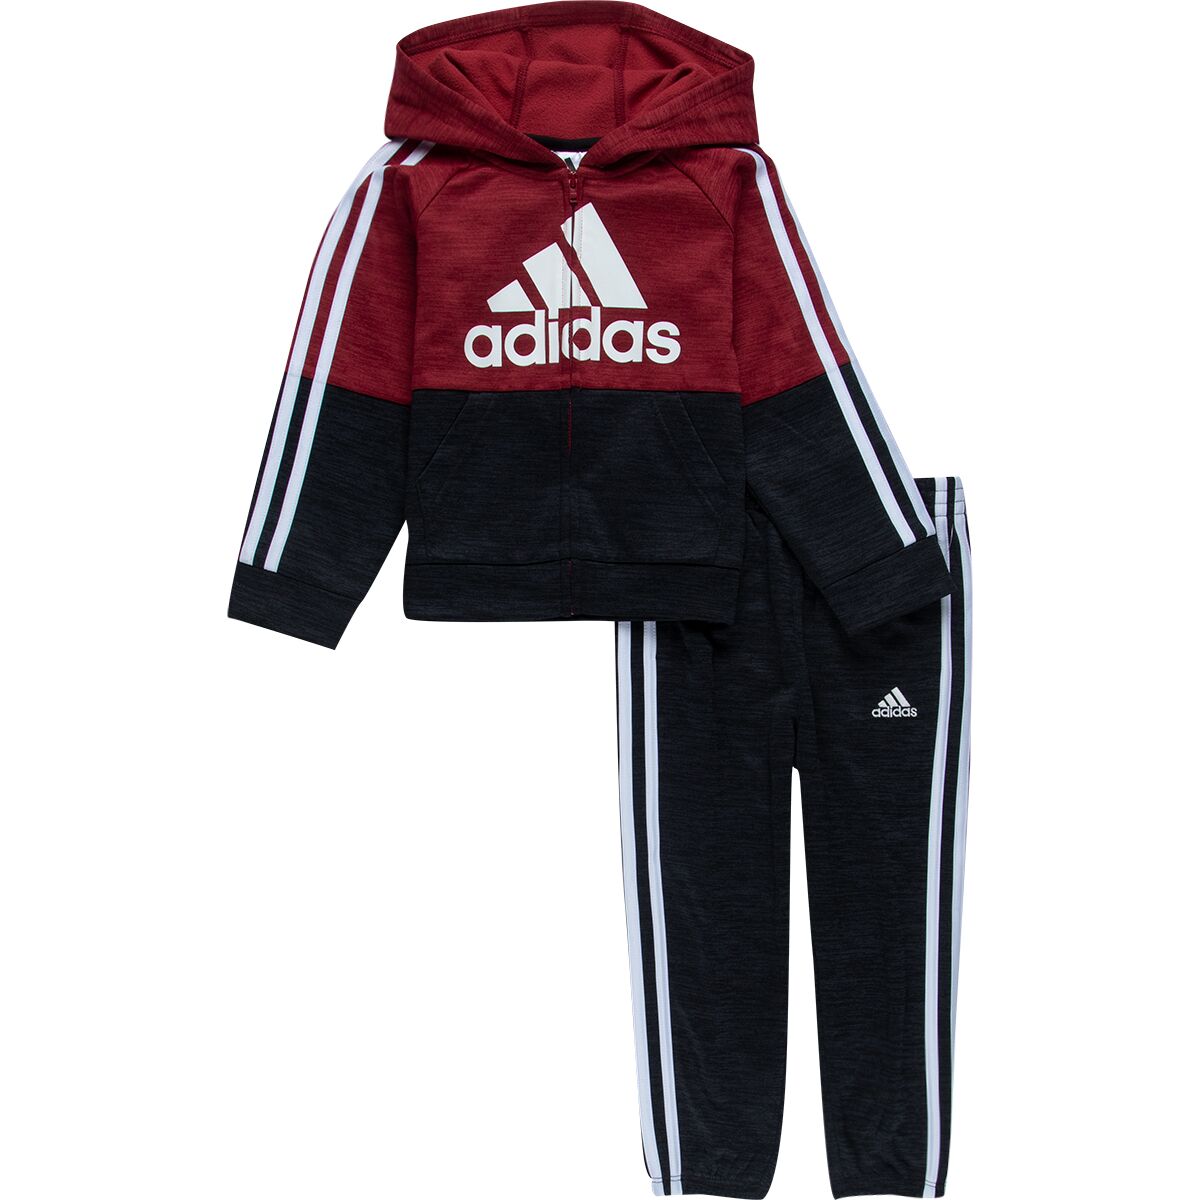 Adidas Brand Love Fleece Jacket Set - Toddler Boys'